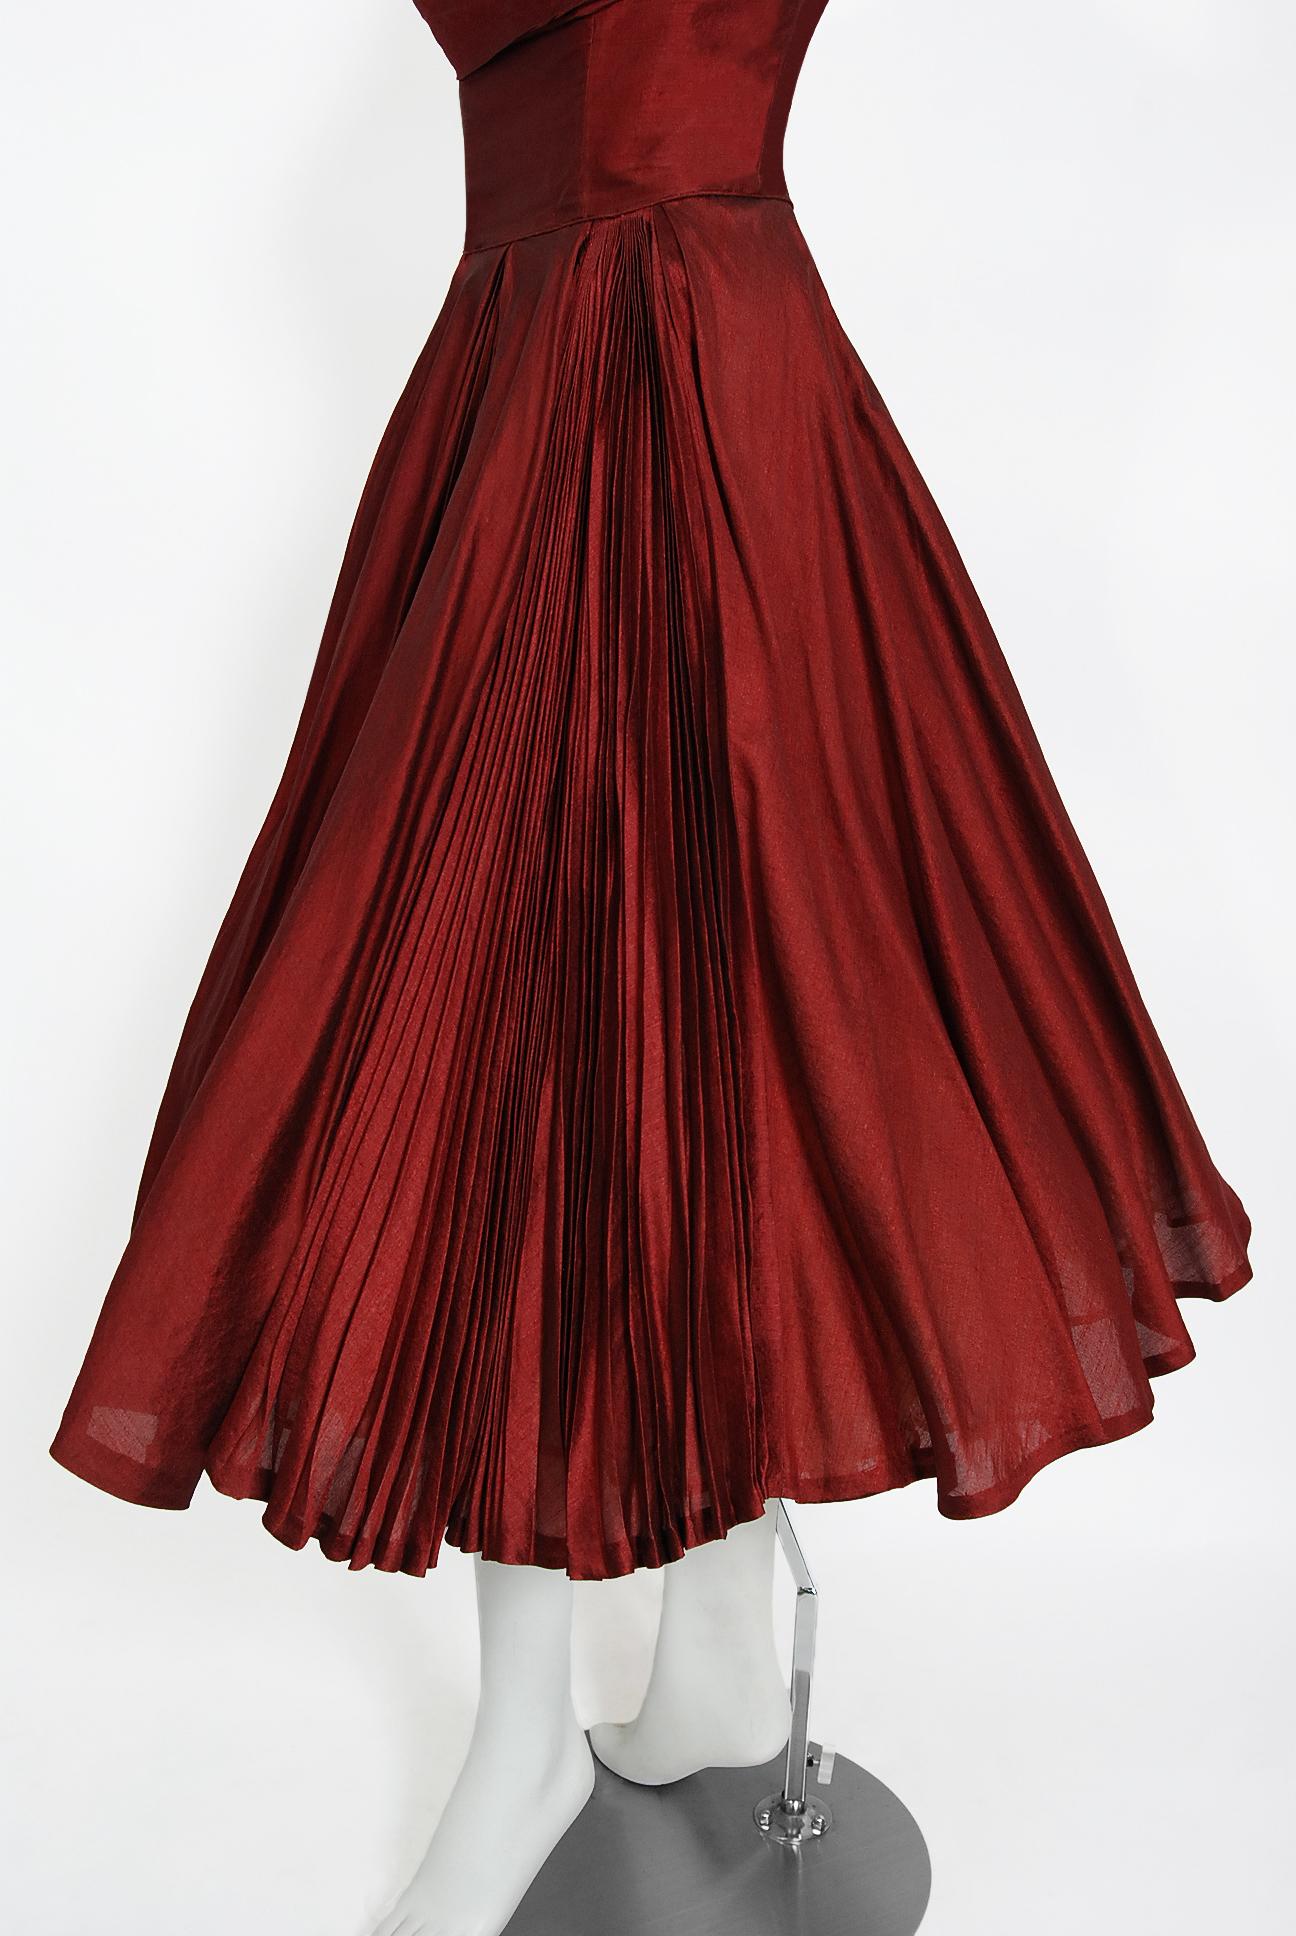 Women's Vintage 1950's Fred Perlberg Merlot Red Silk Halter Pleated Circle-Skirt Dress